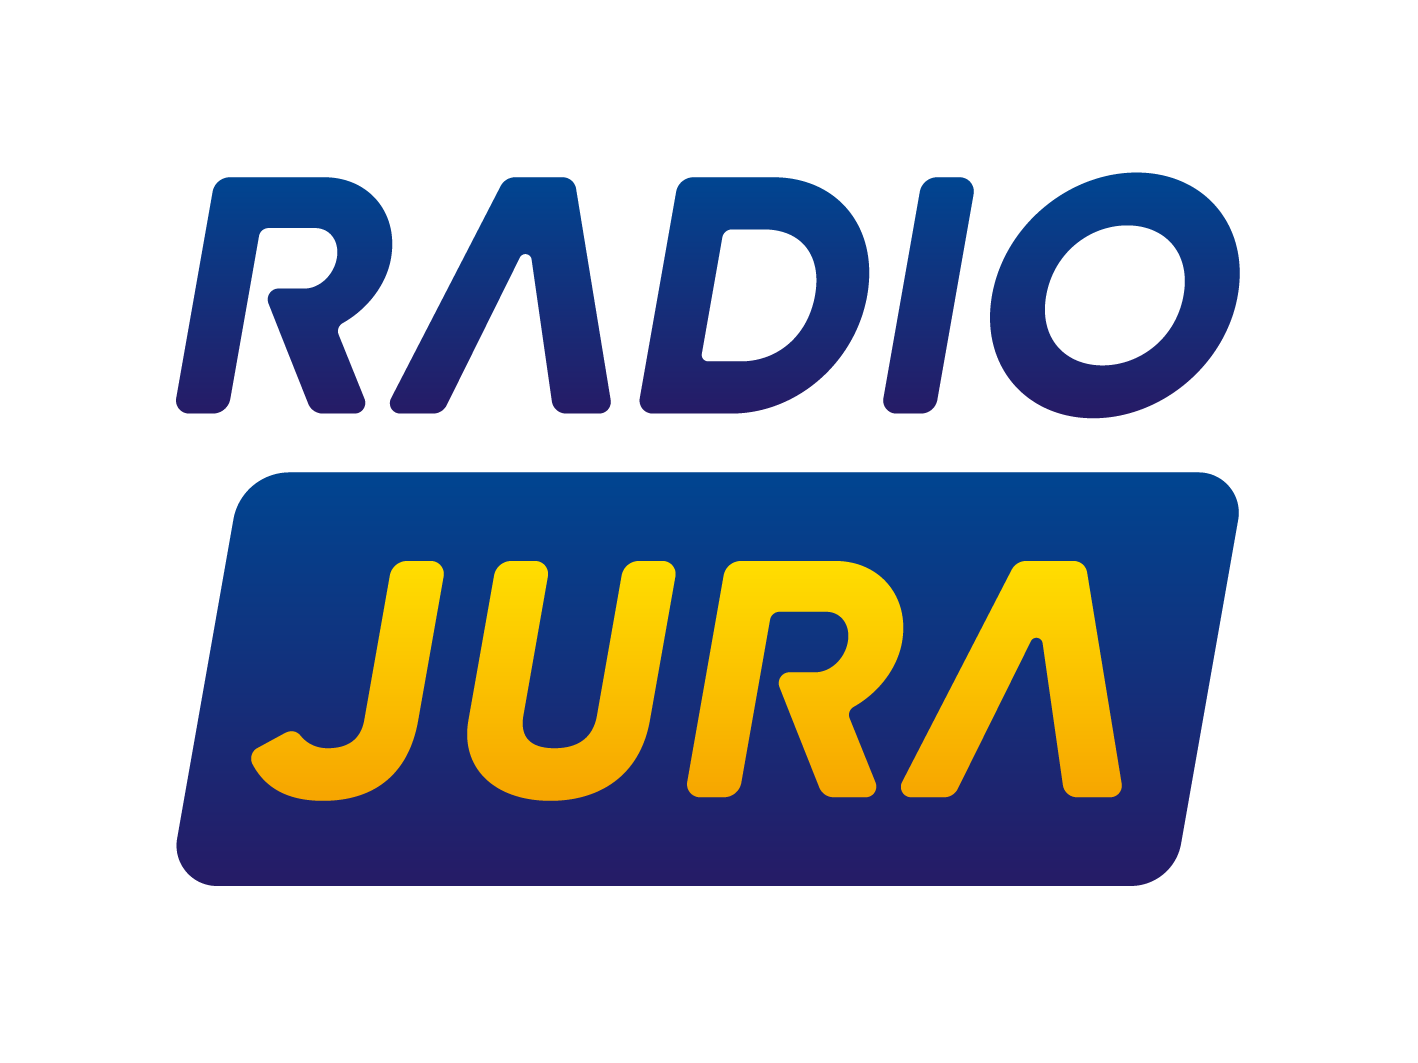 Radio Jura